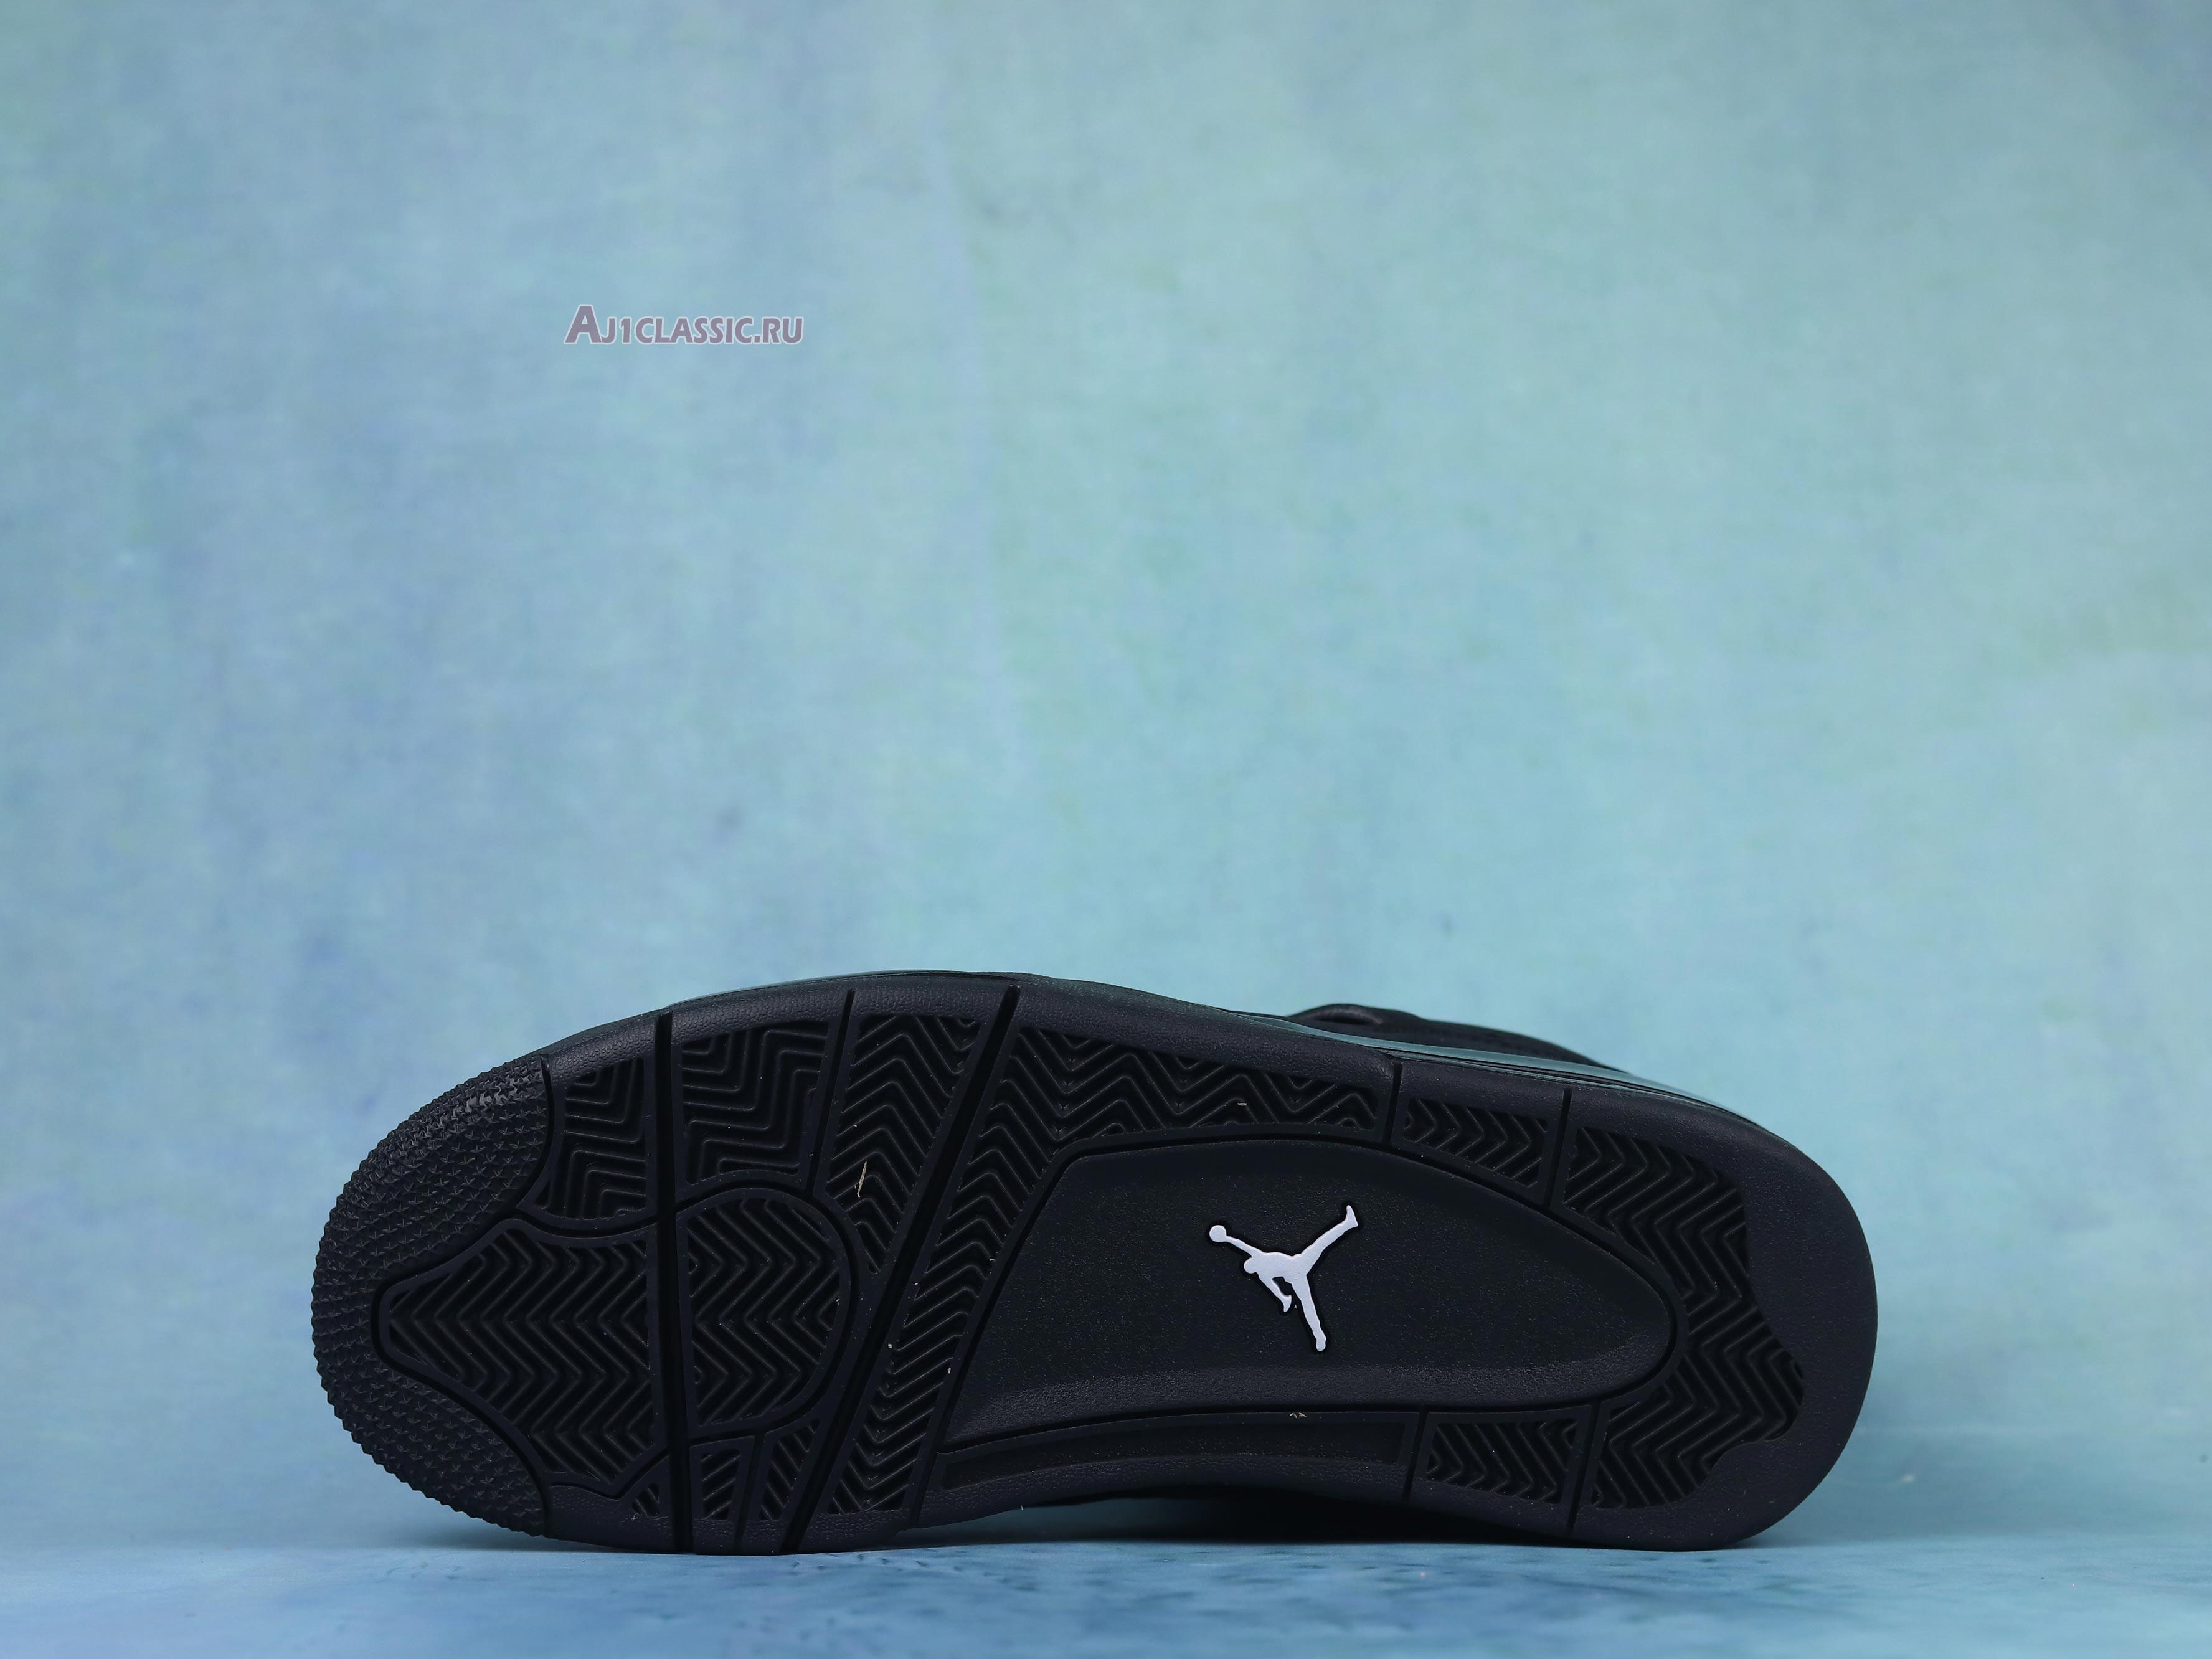 Air Jordan 4 Retro "Black Cat" 2020 CU1110-010-02